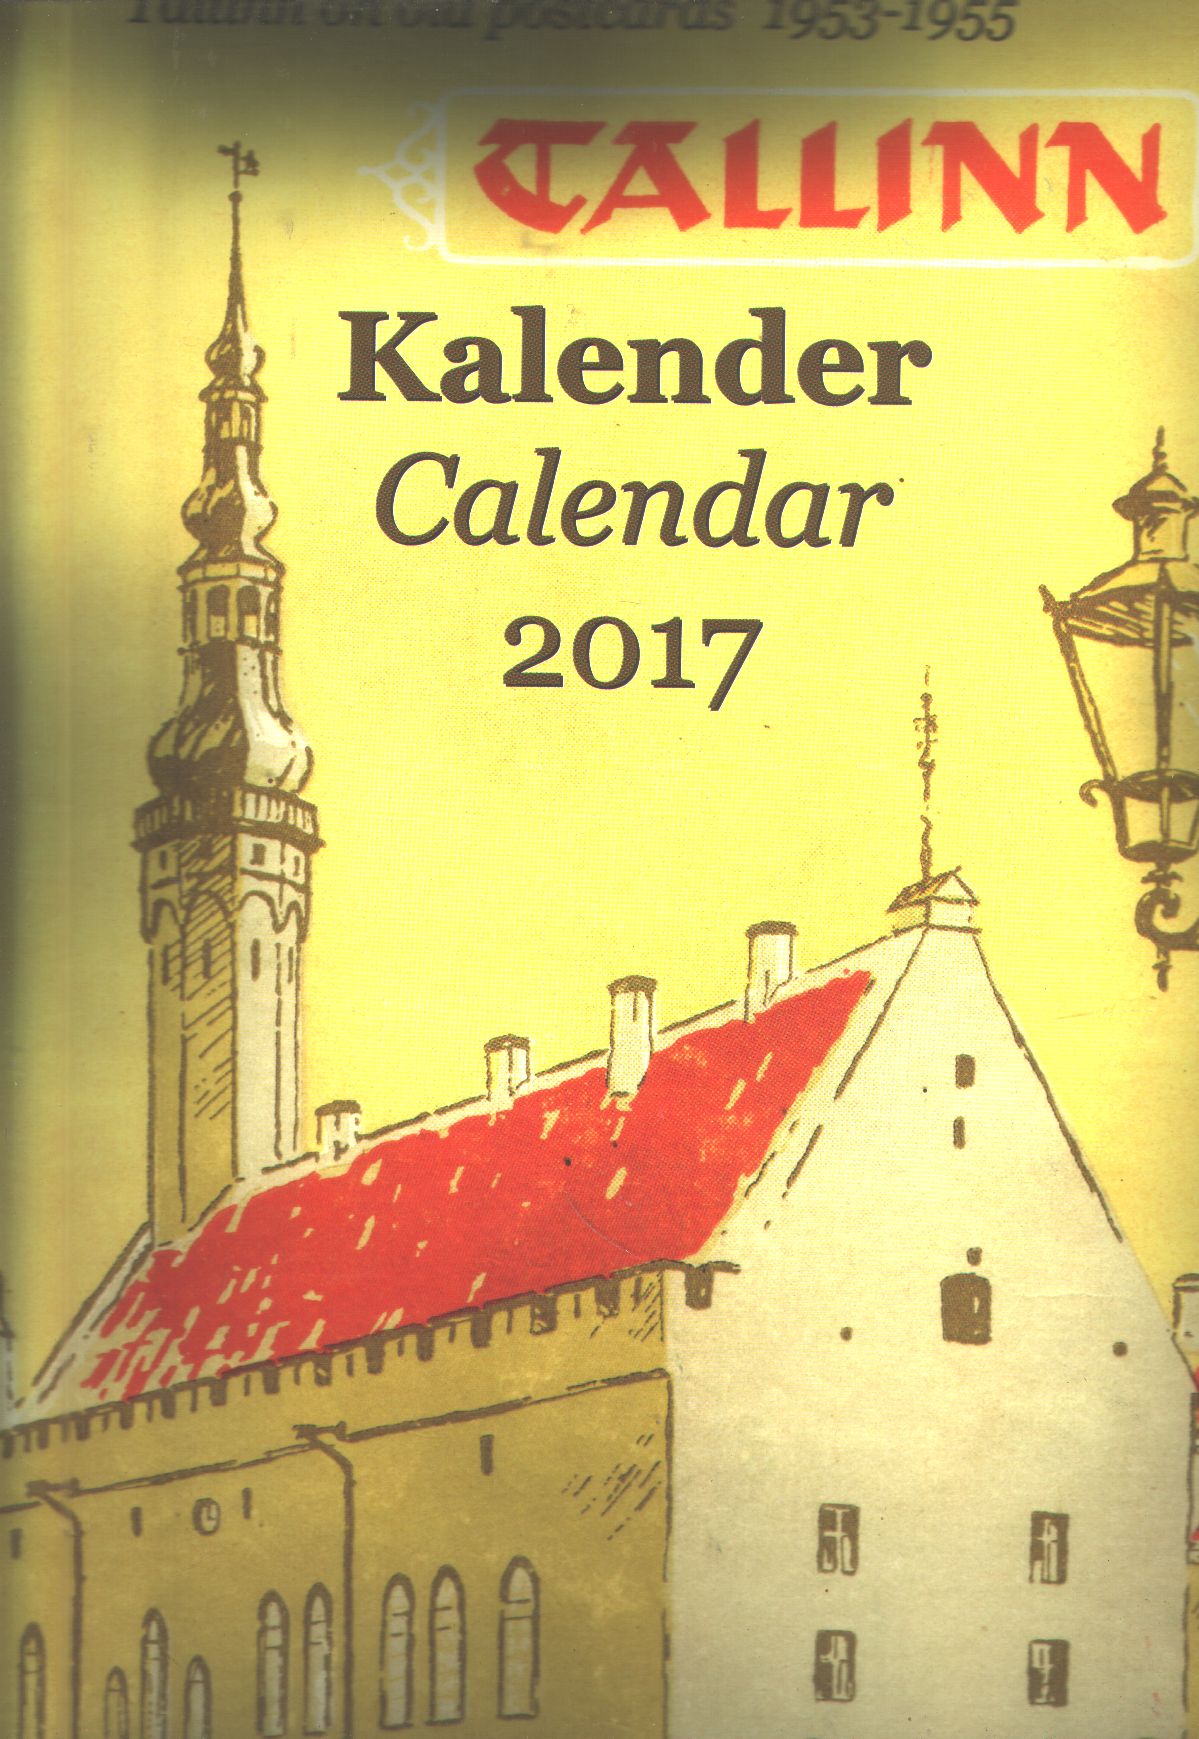 Academic Library of Tallinn University  Tallinn on old Postcards 1953 - 1955  Calendar 2017 